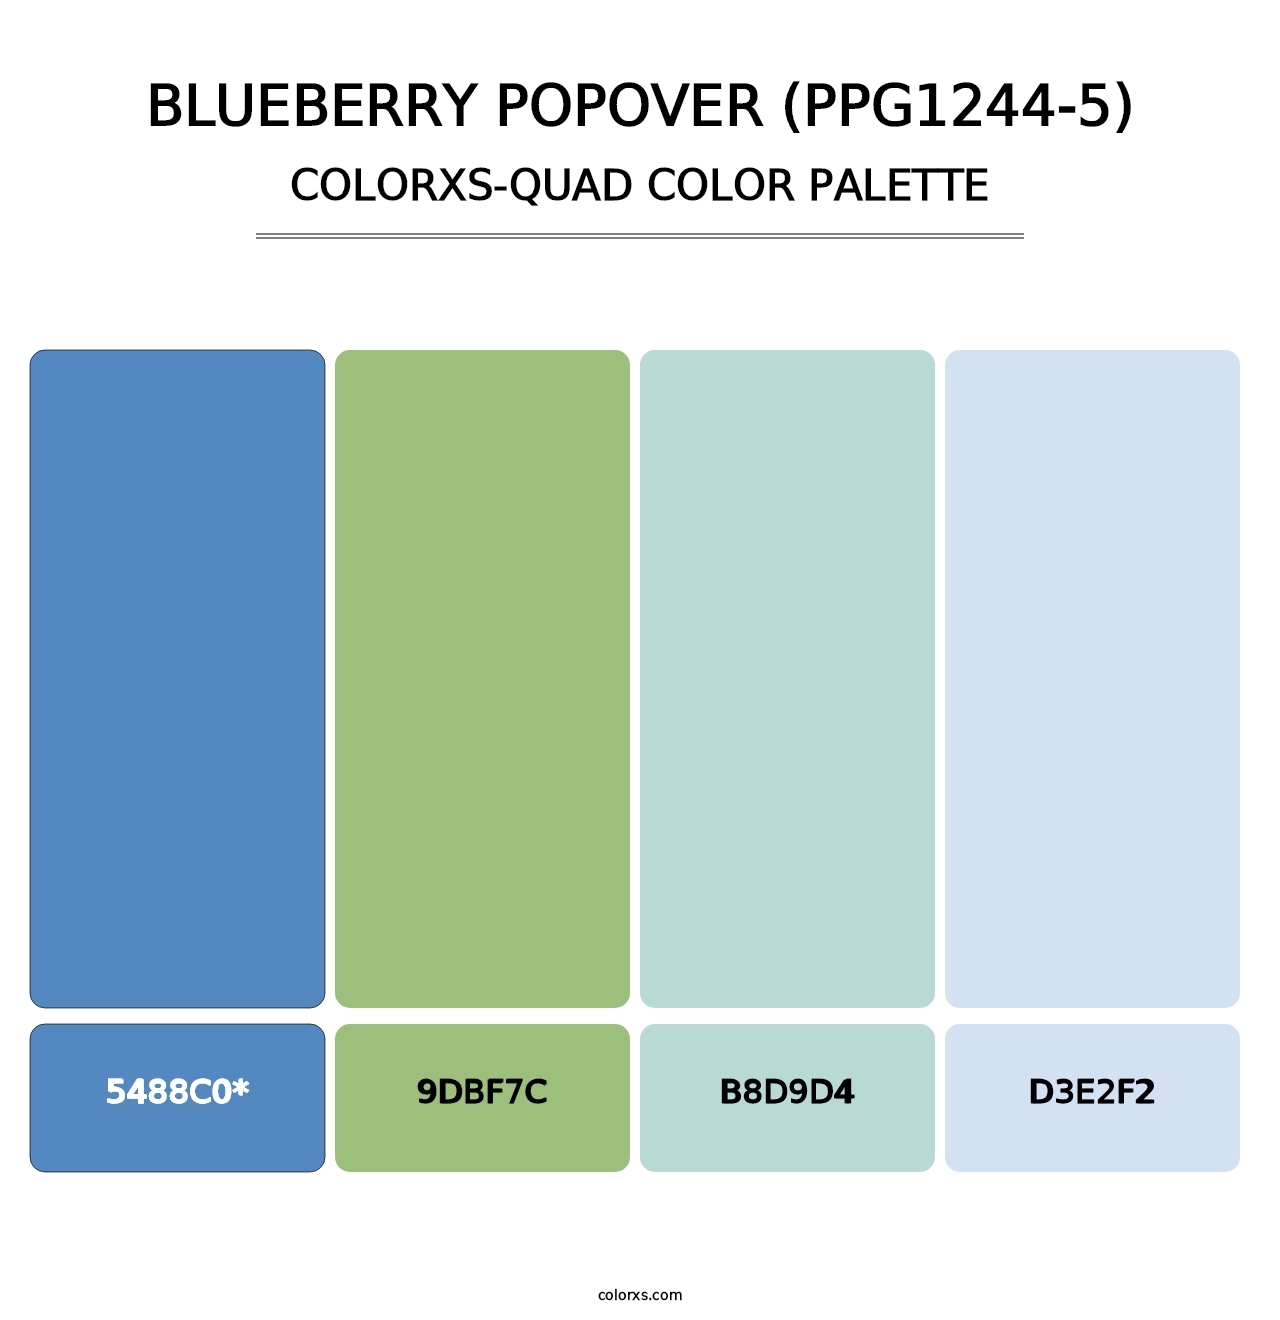 Blueberry Popover (PPG1244-5) - Colorxs Quad Palette